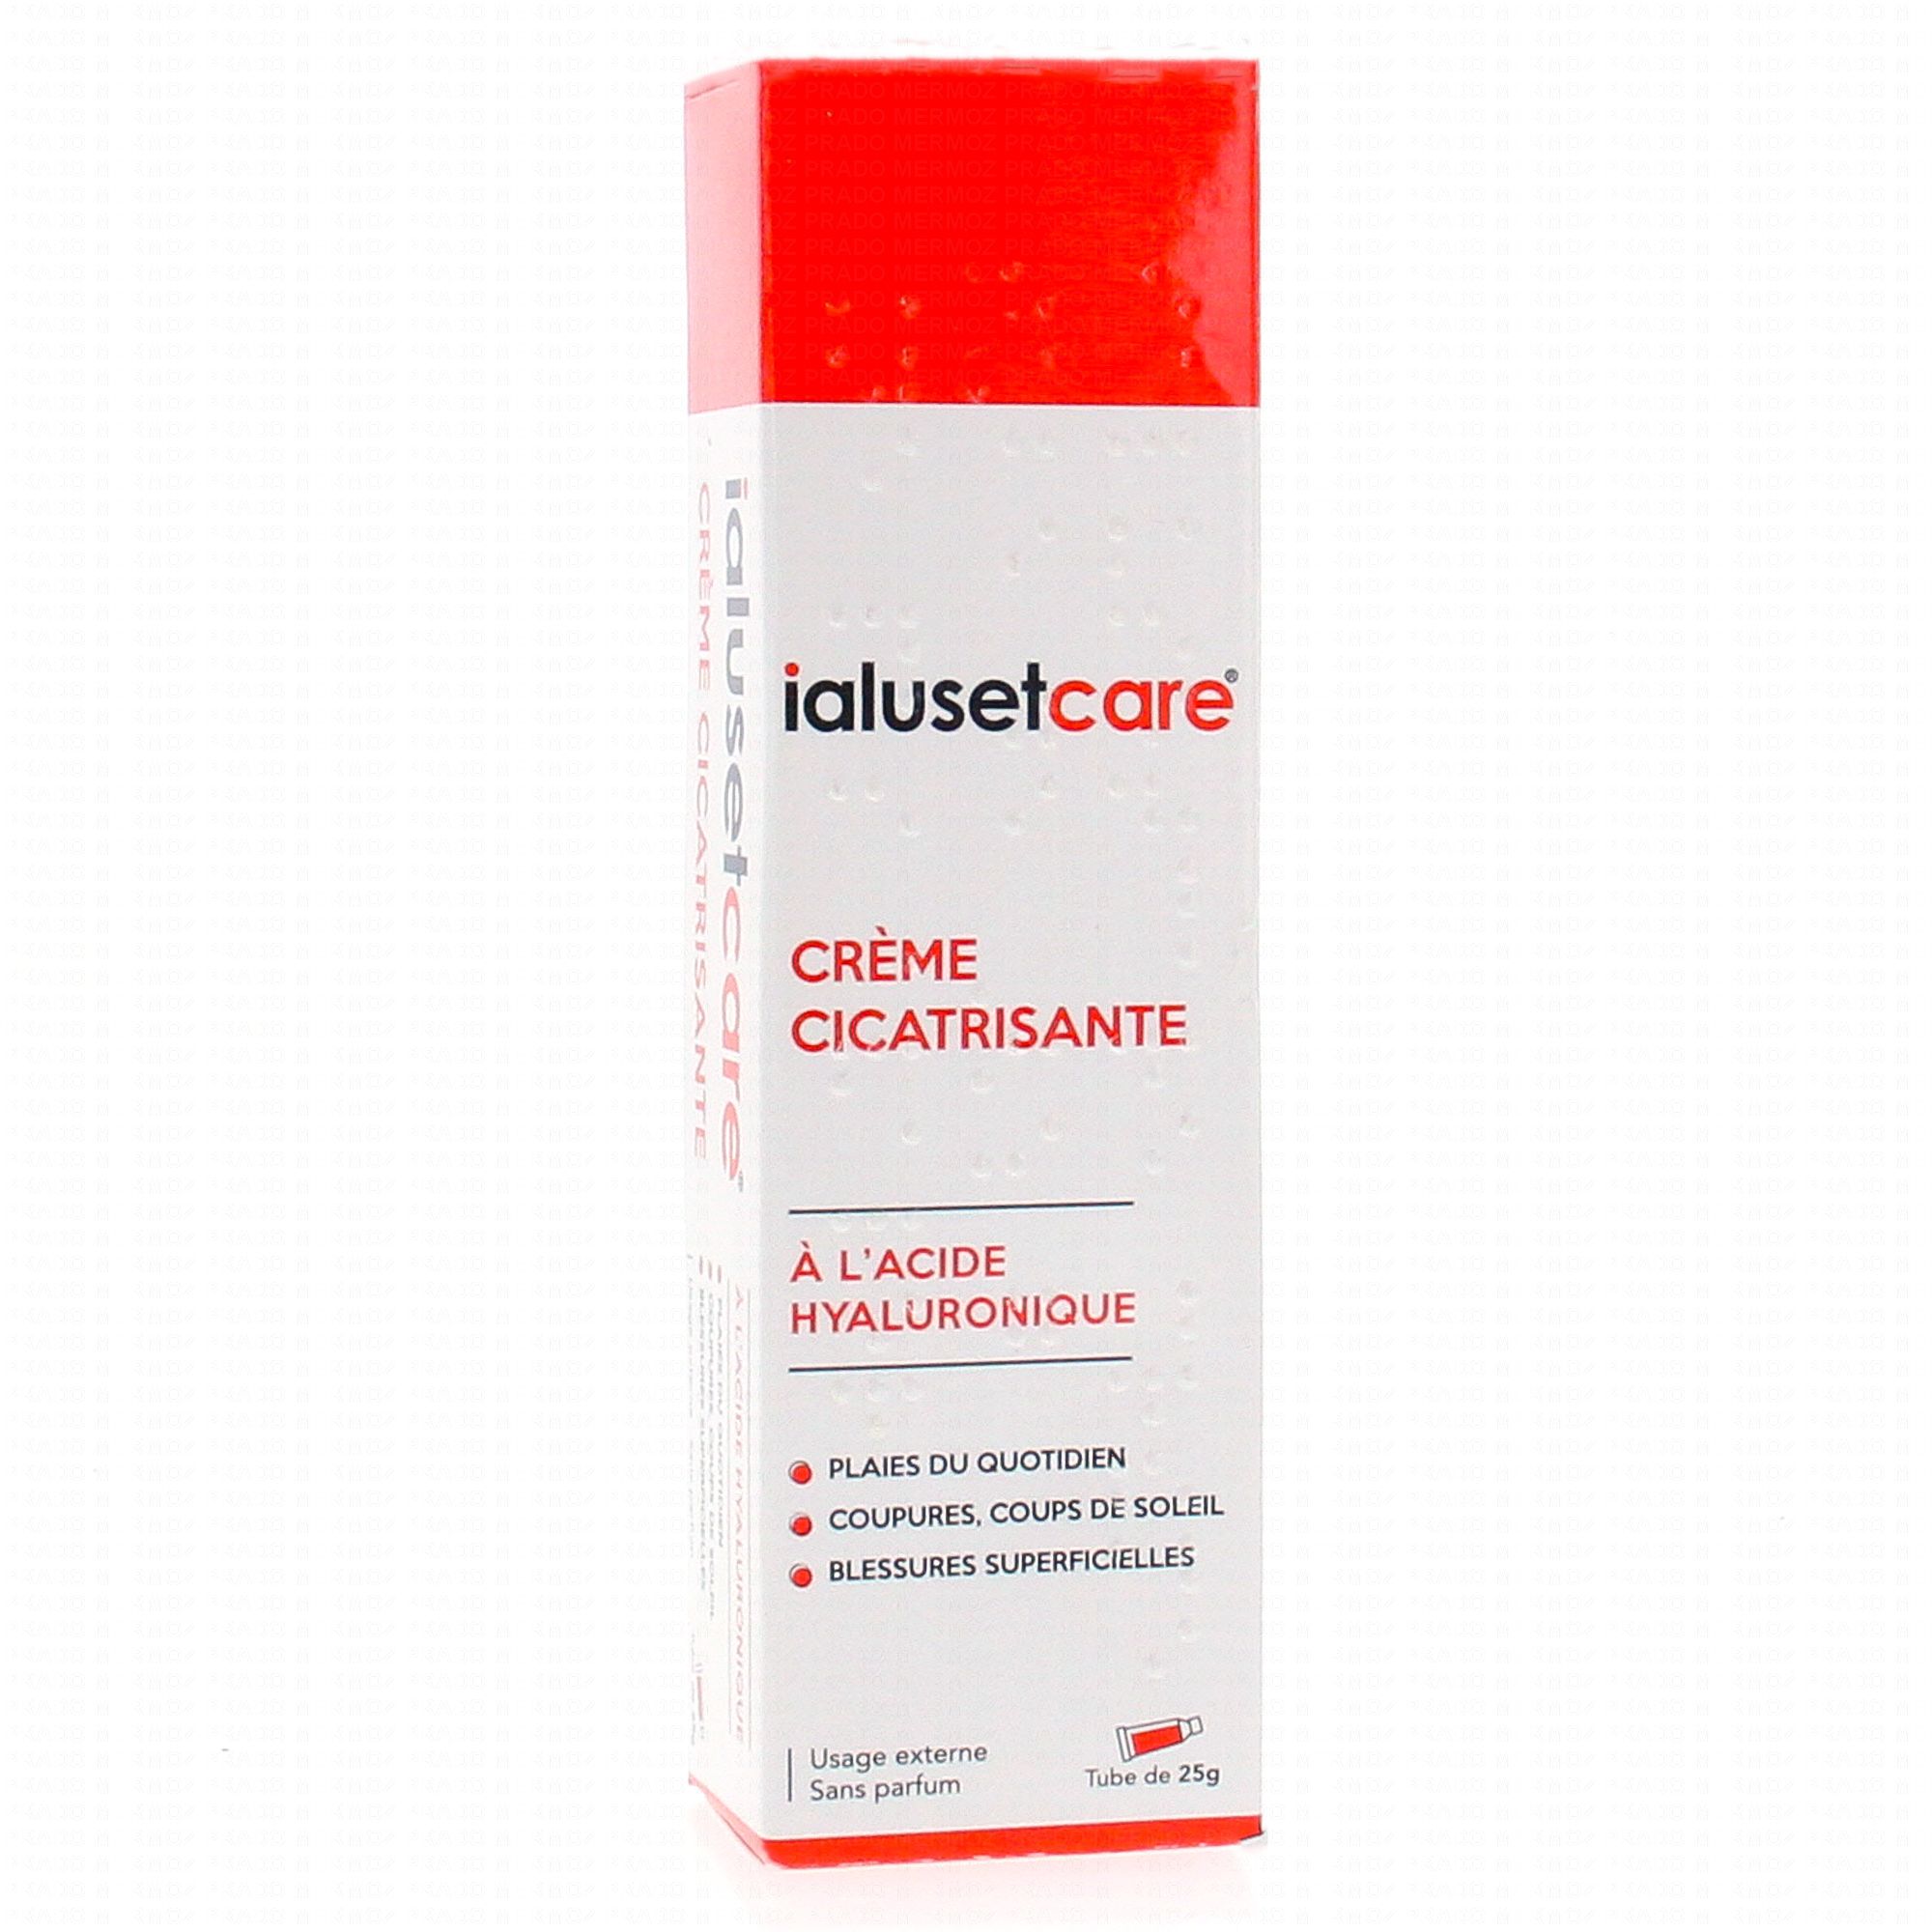 IALUSET CARE Crème cicatrisante - Pharmacie Prado Mermoz